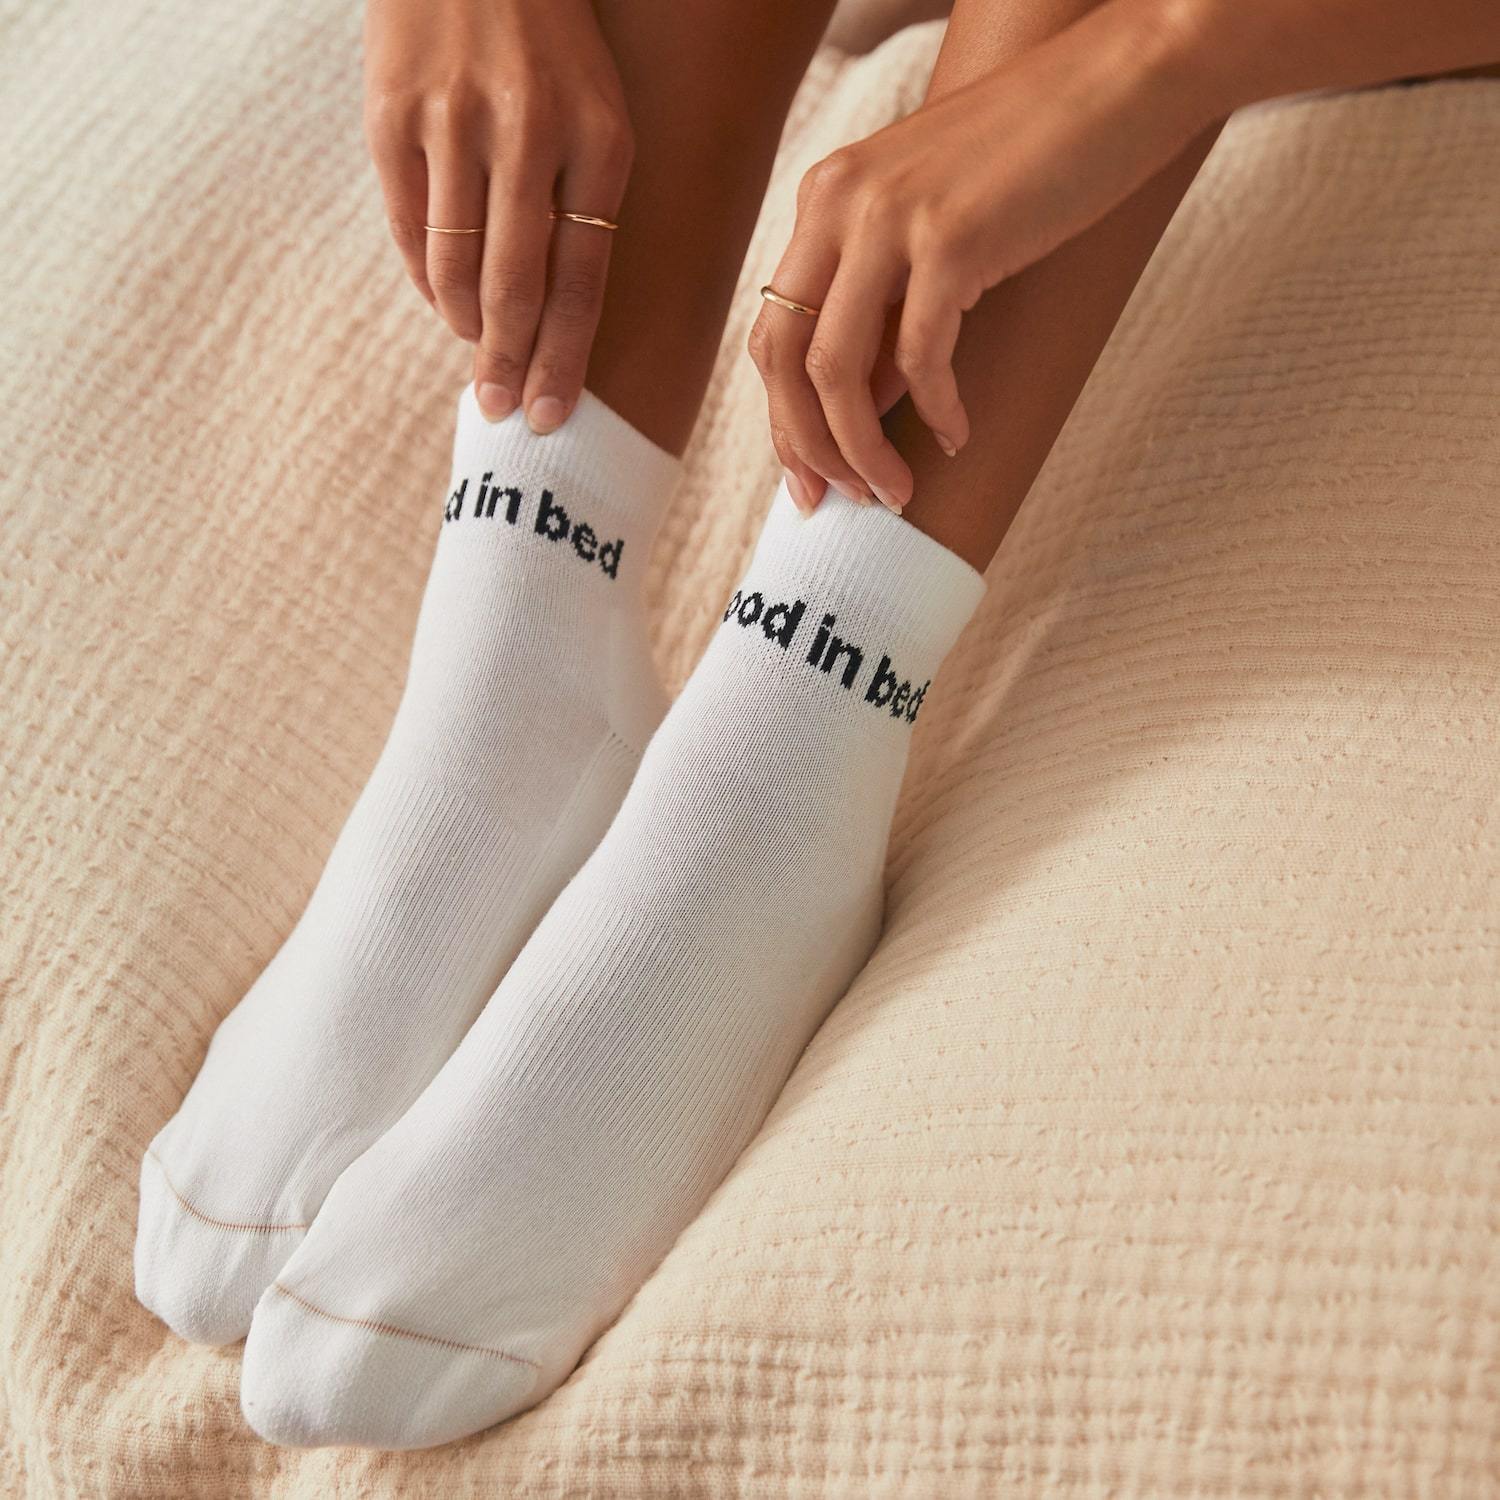 Lunya Pajamas Organic Cotton Socks - #Sincere White/Immersed Black